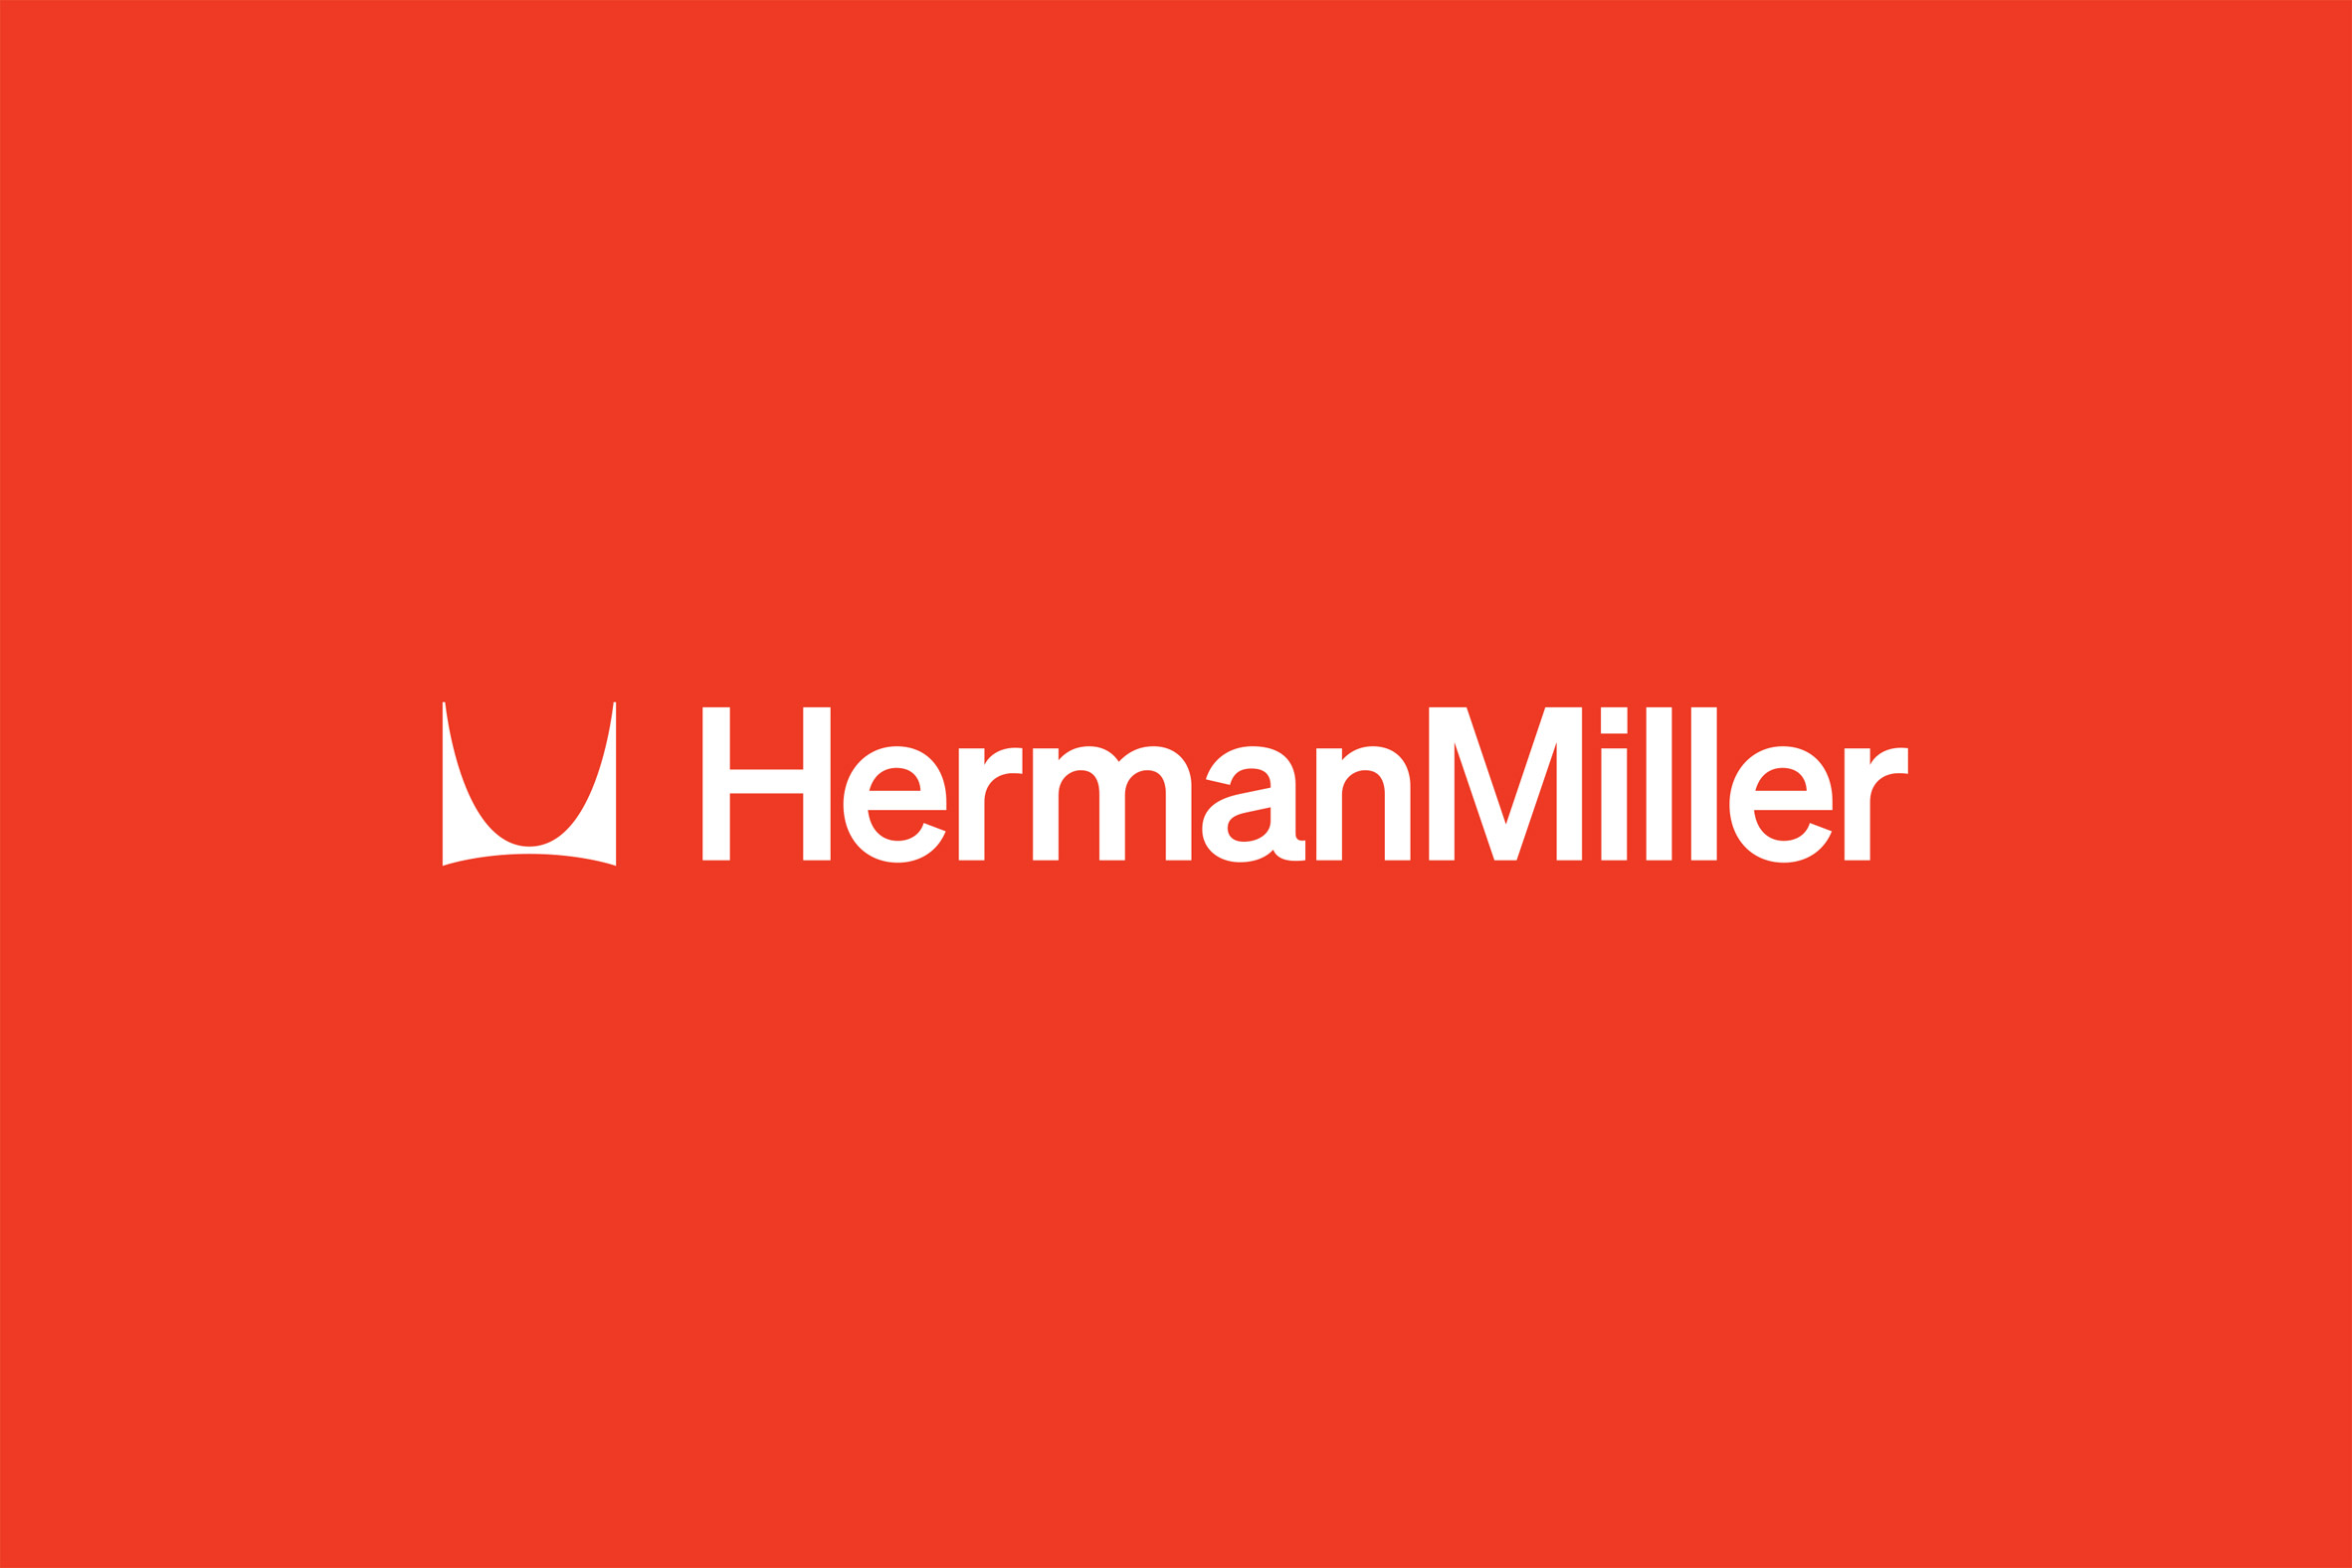 White Herman Miller logo by Order Design on a red backdrop